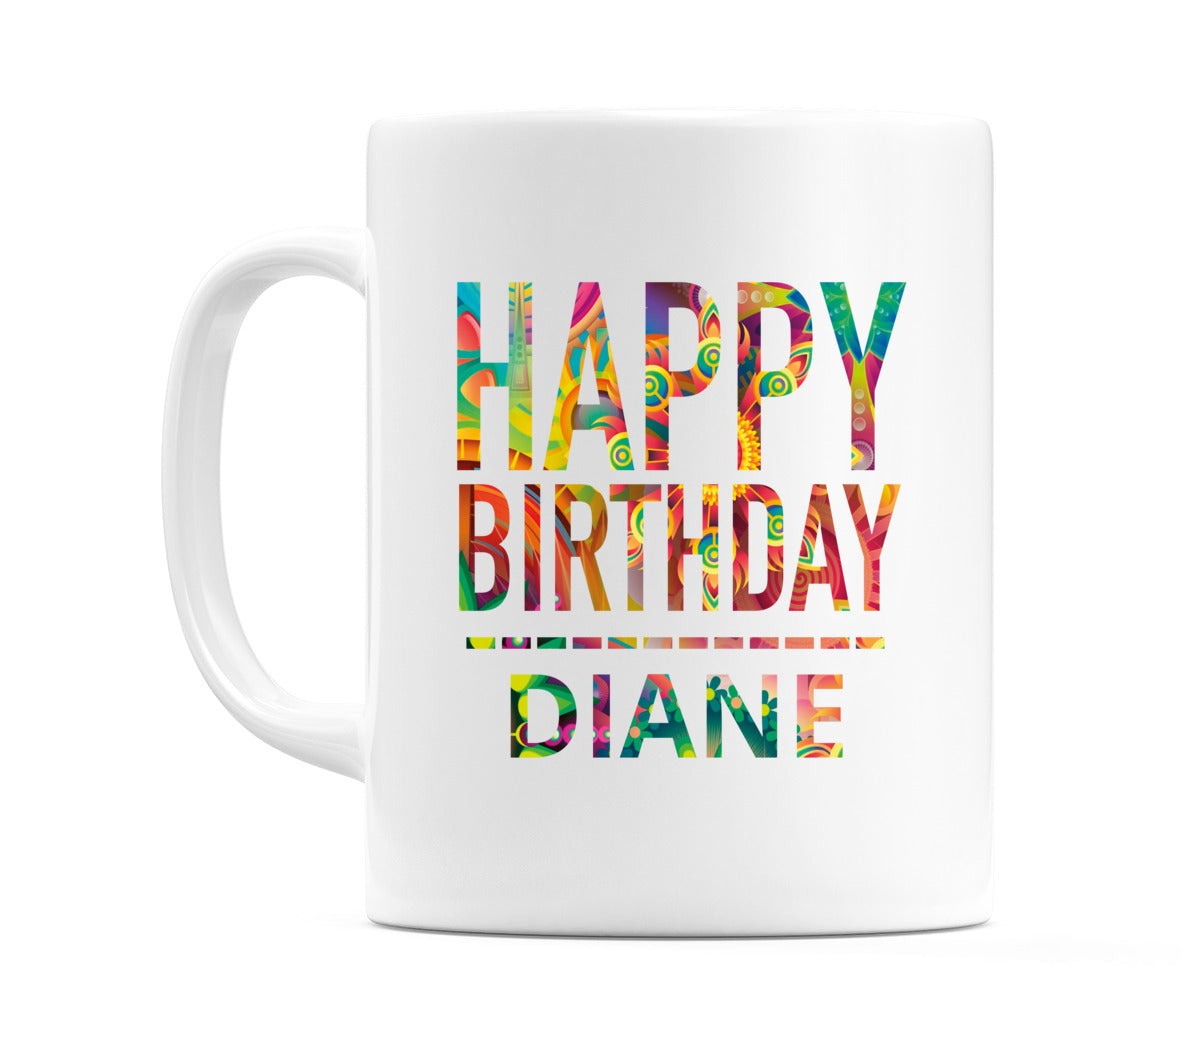 Happy Birthday Diane (Tie Dye Effect) Mug Cup by WeDoMugs